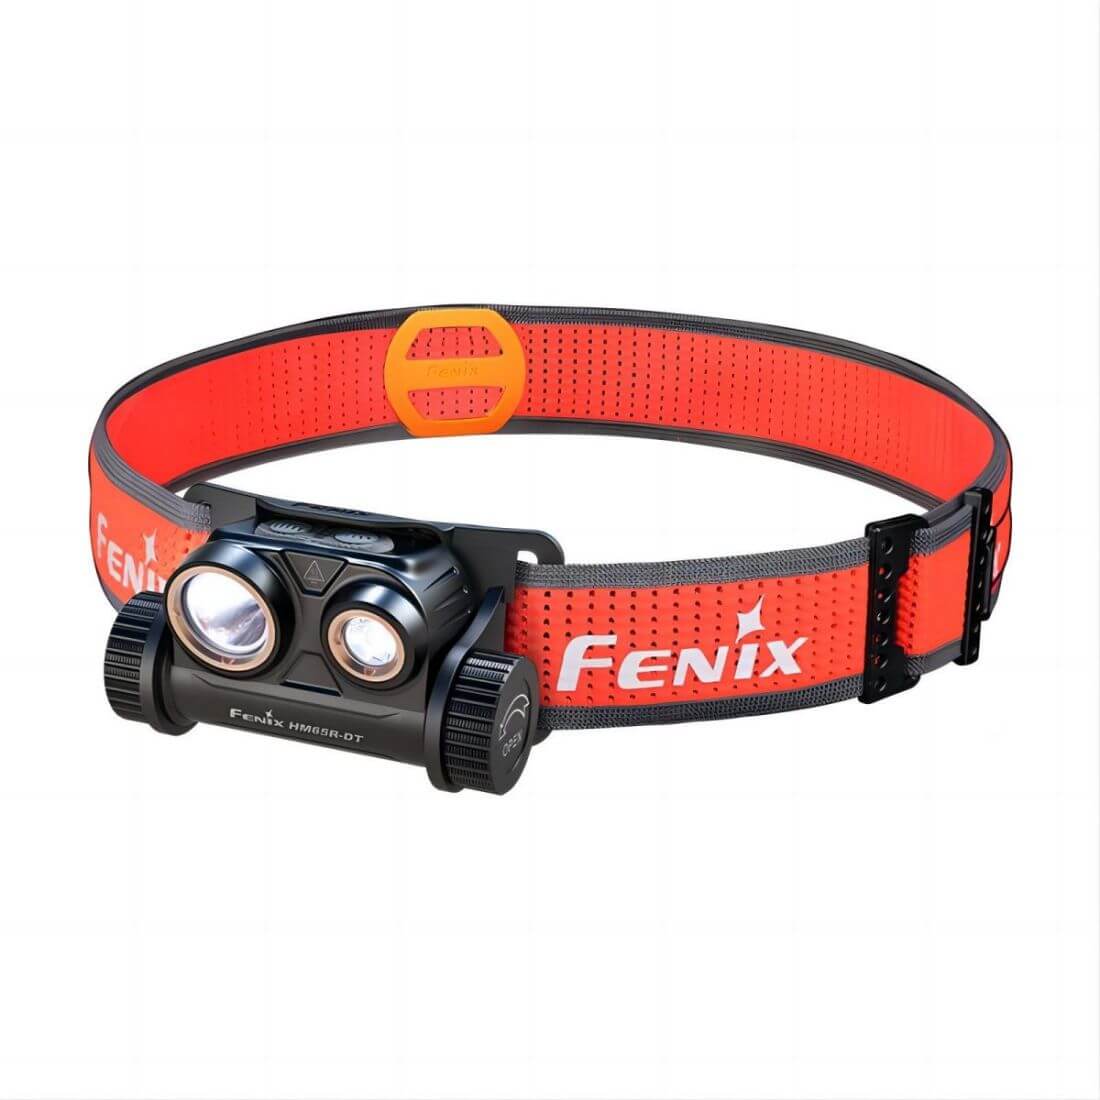 Fenix HM65R-DT 1500lm USB-C 18650 Magnesium Alloy Headlamp